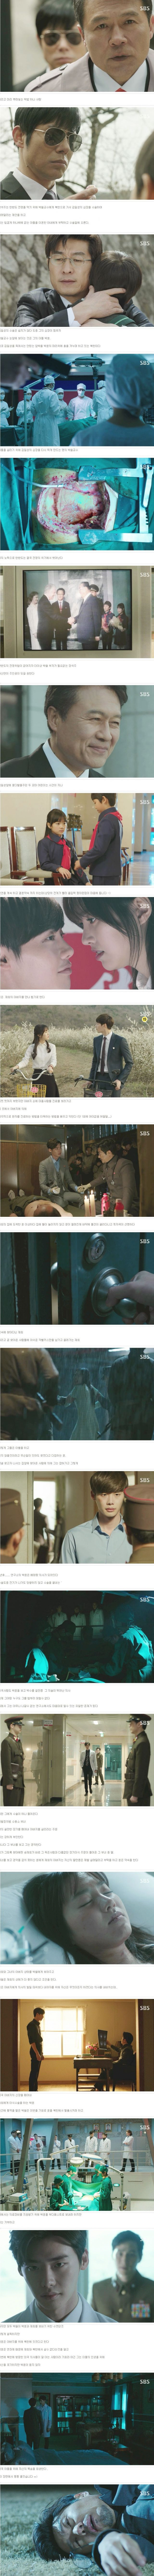 episode 1 captures for the Korean drama 'Doctor Stranger'